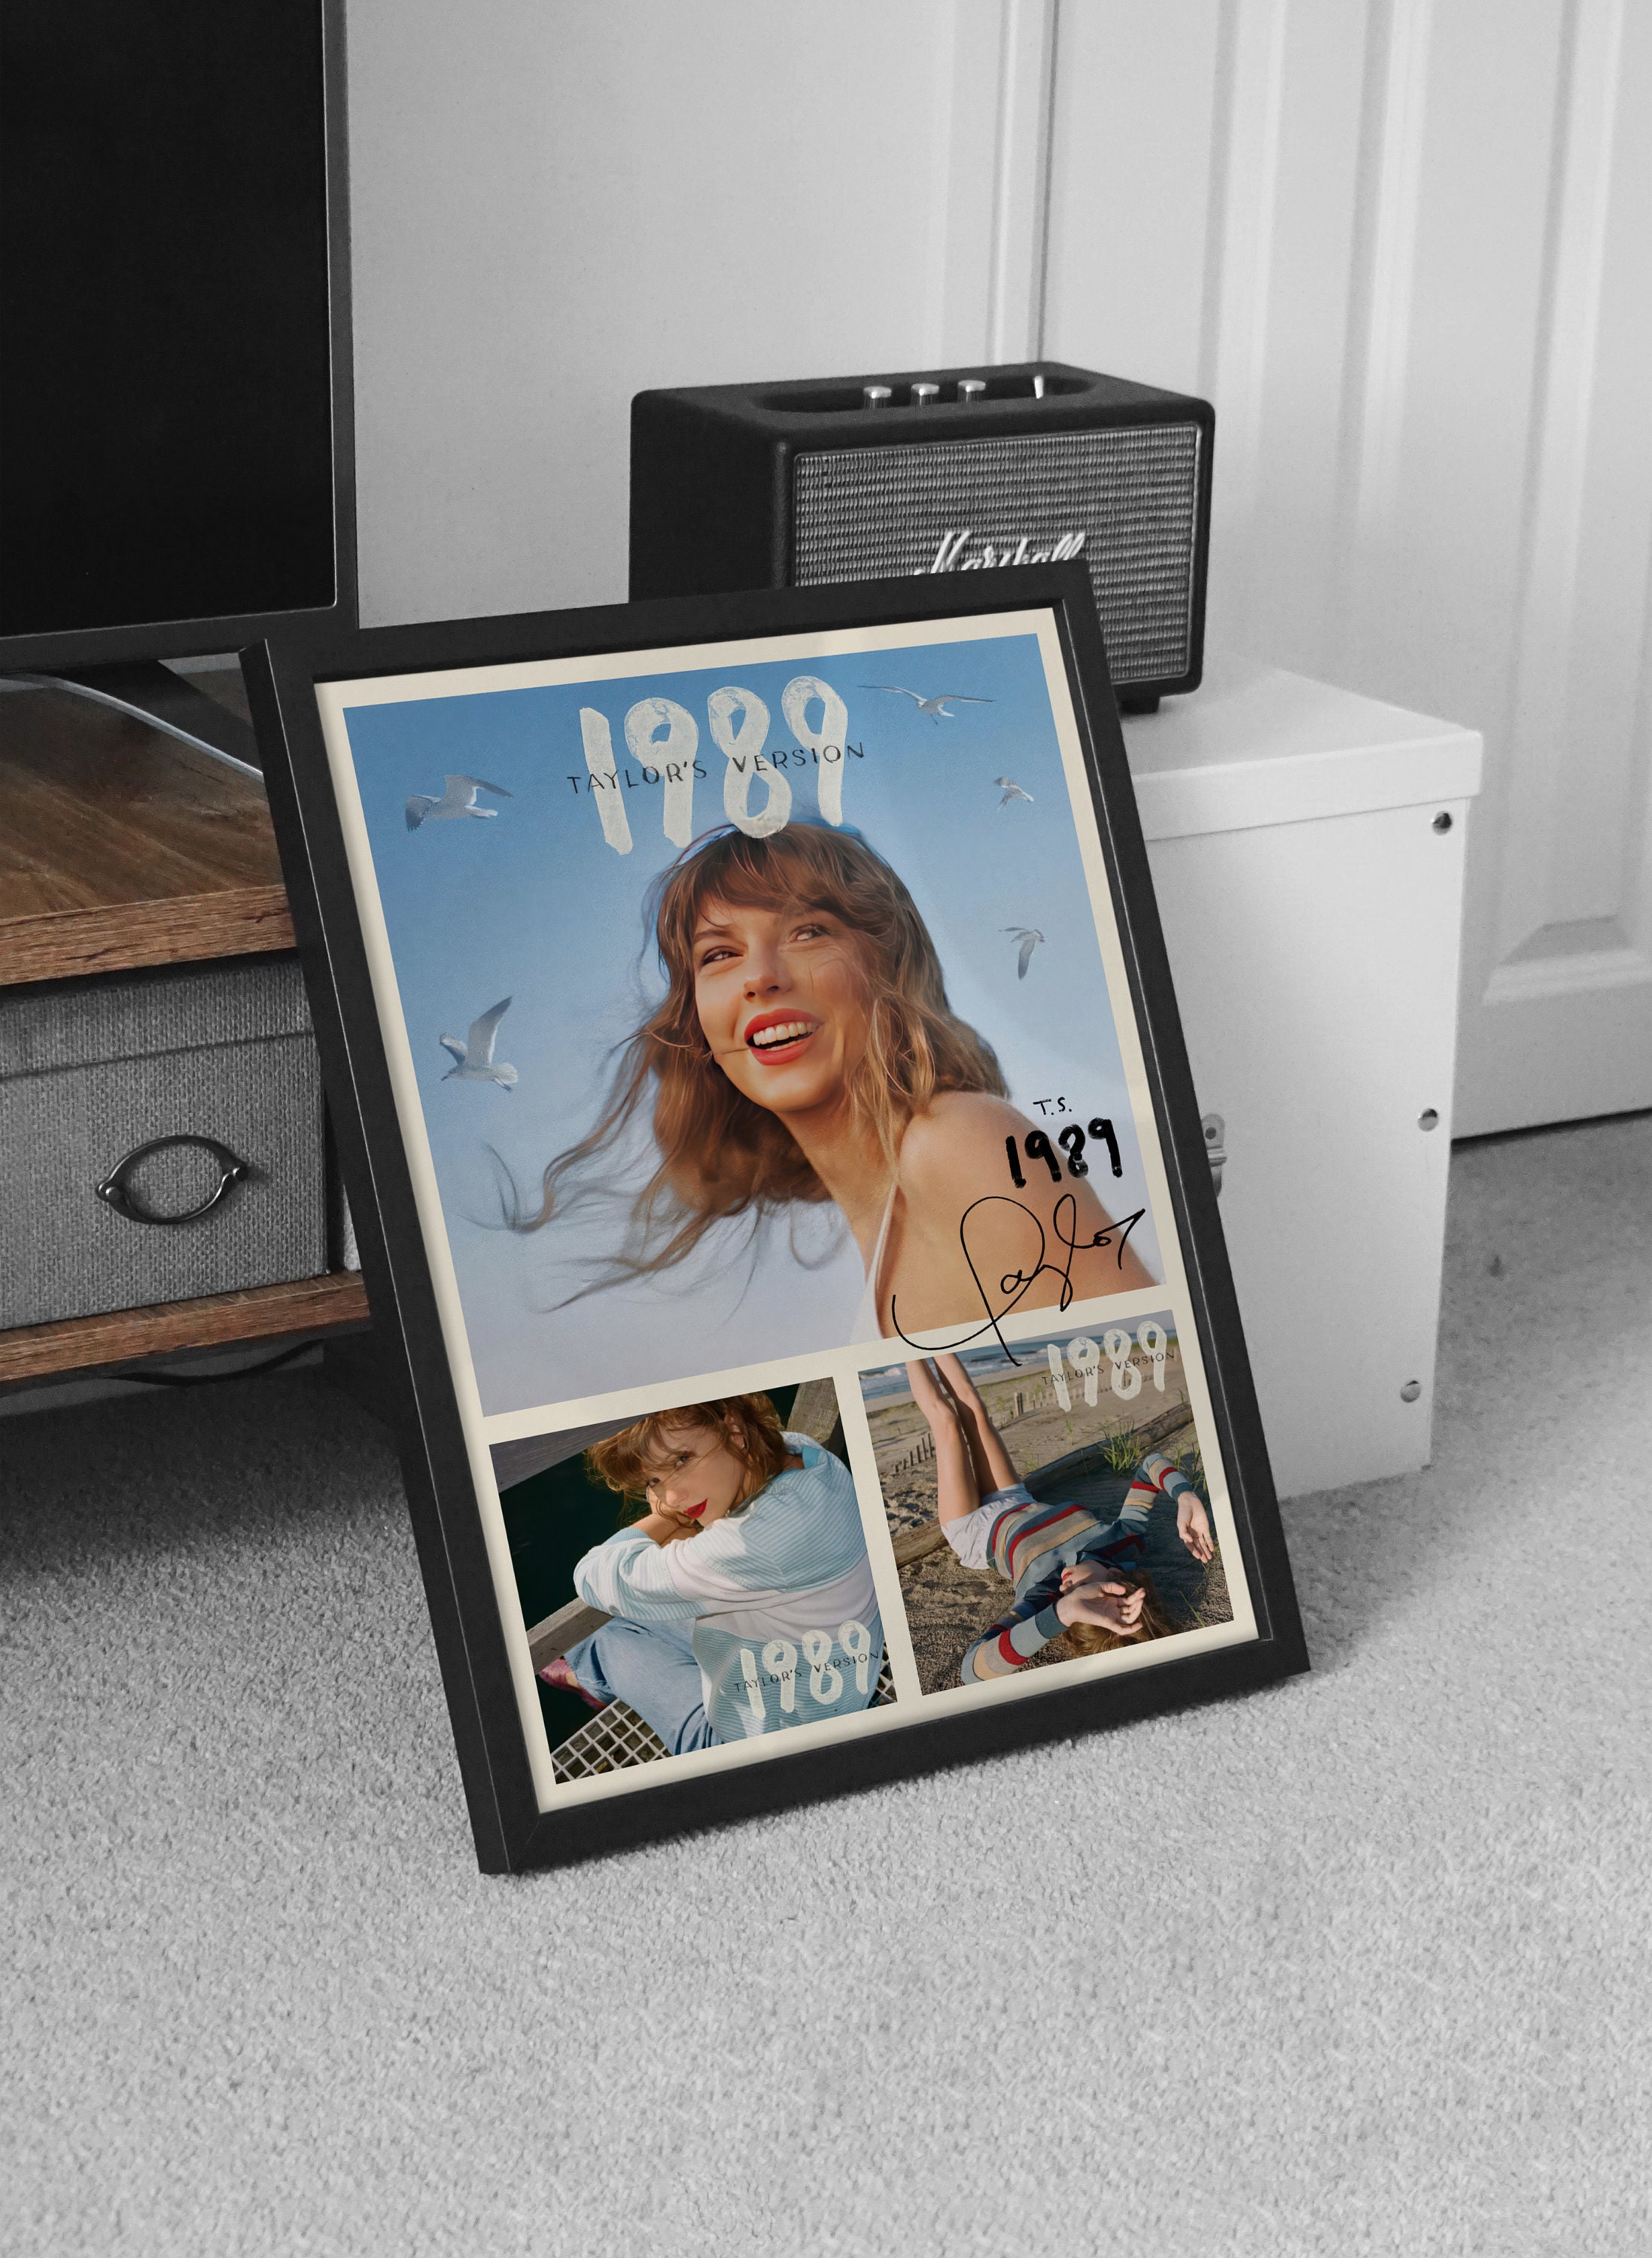 Taylor Poster, Taylor version 1989